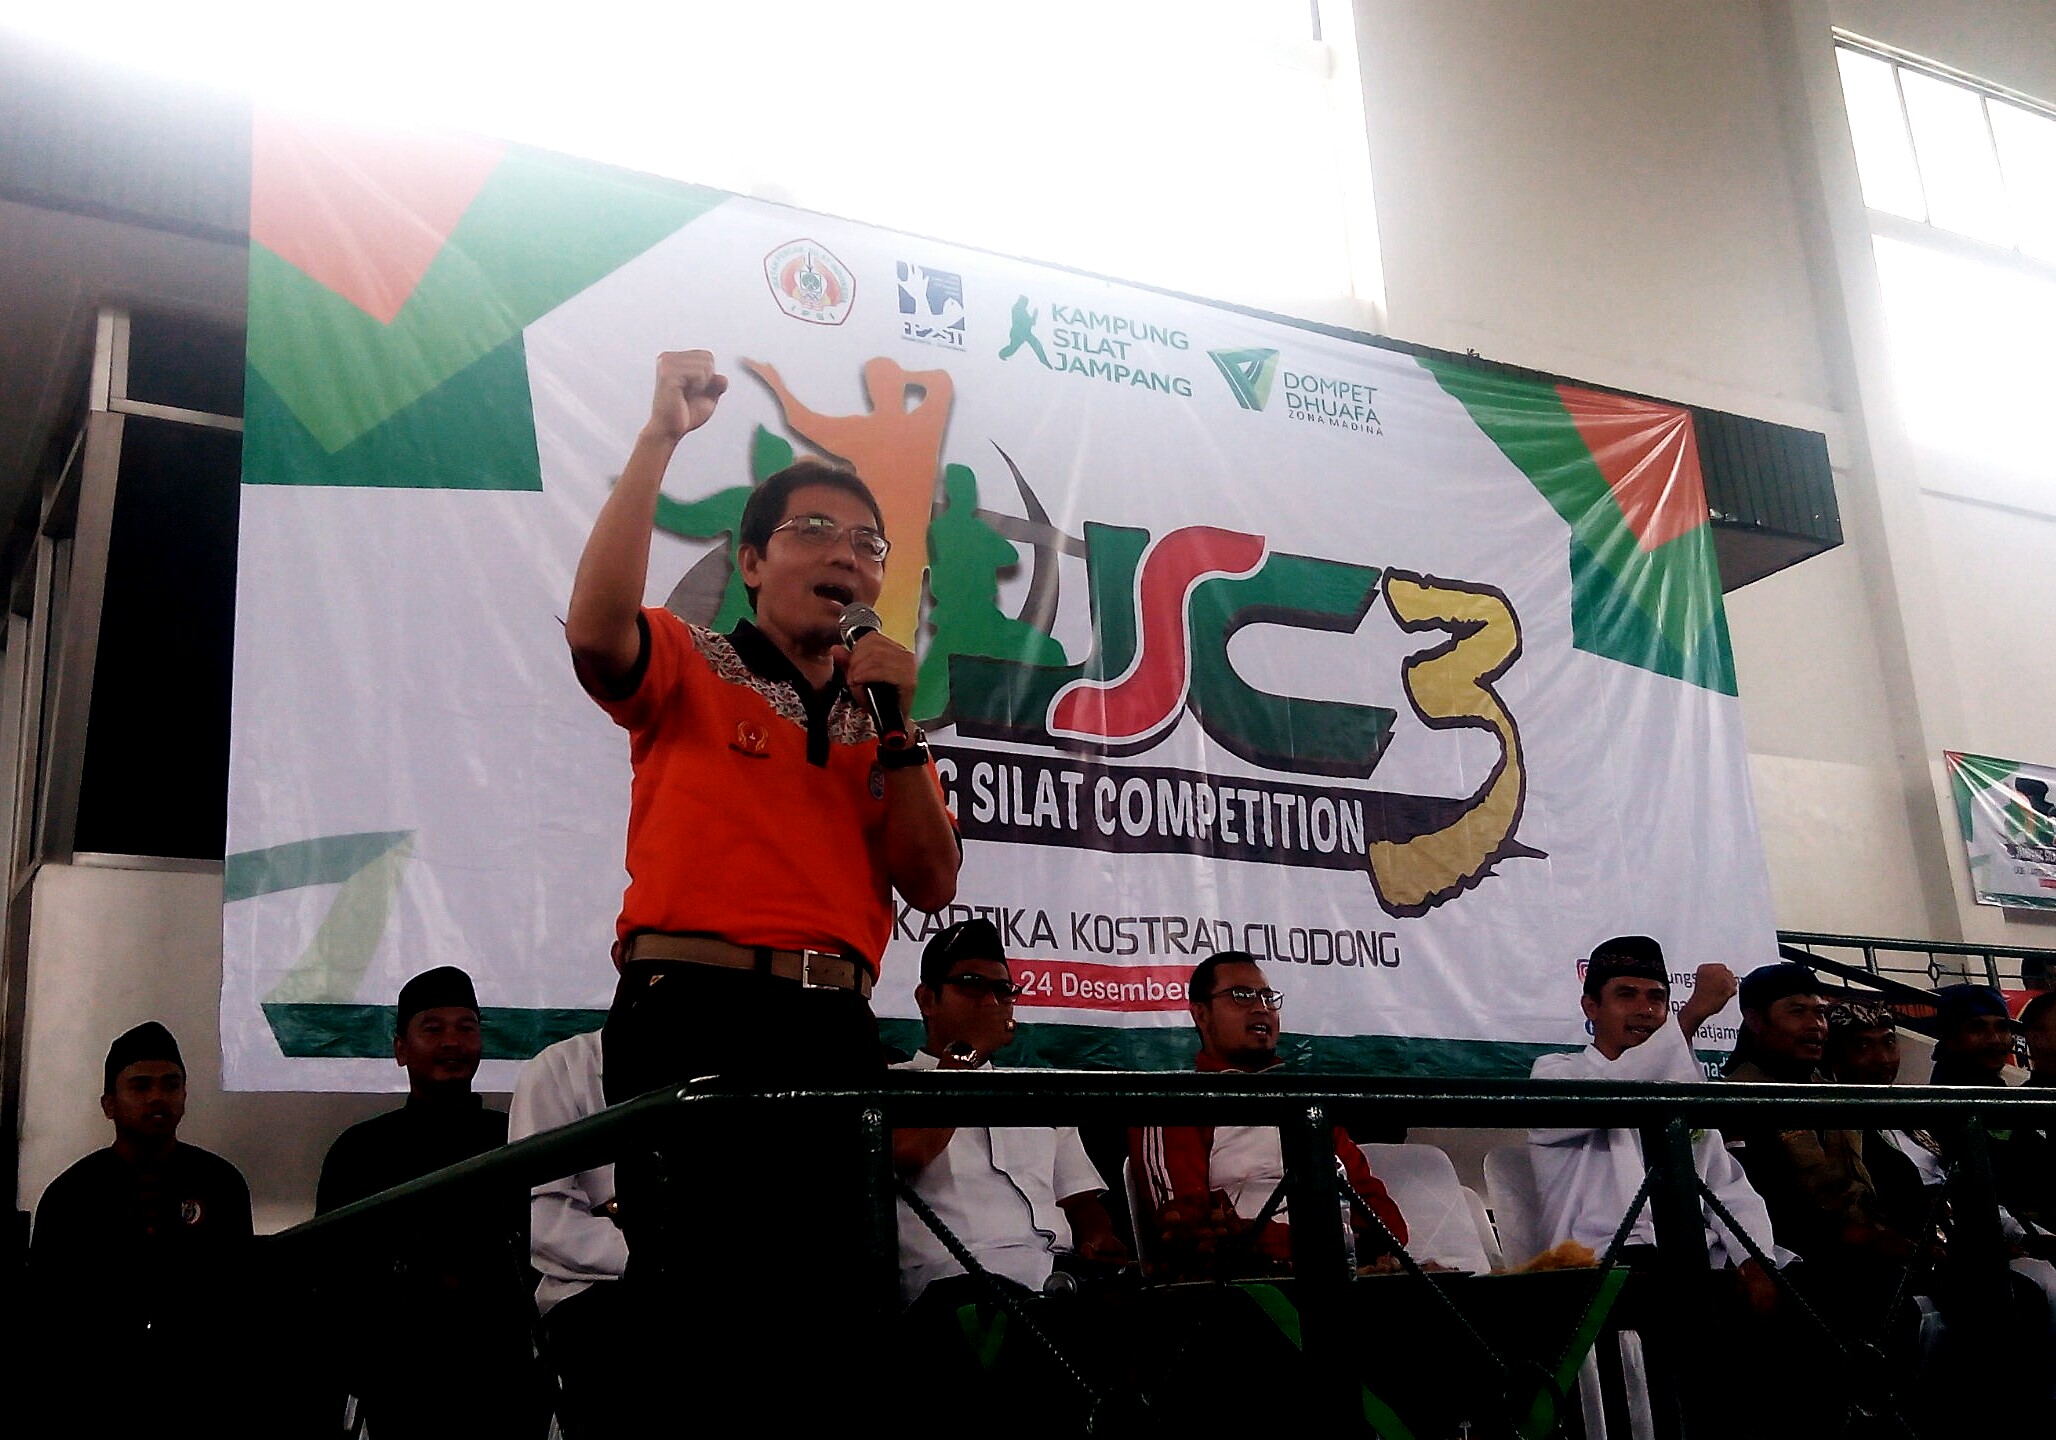 Ketua KONI memberikan semangat kepada pesilat yang akan mengikuti ajang Jampang silat Competition di GOR Kartika Kostrad Cilodong Jawa Barat